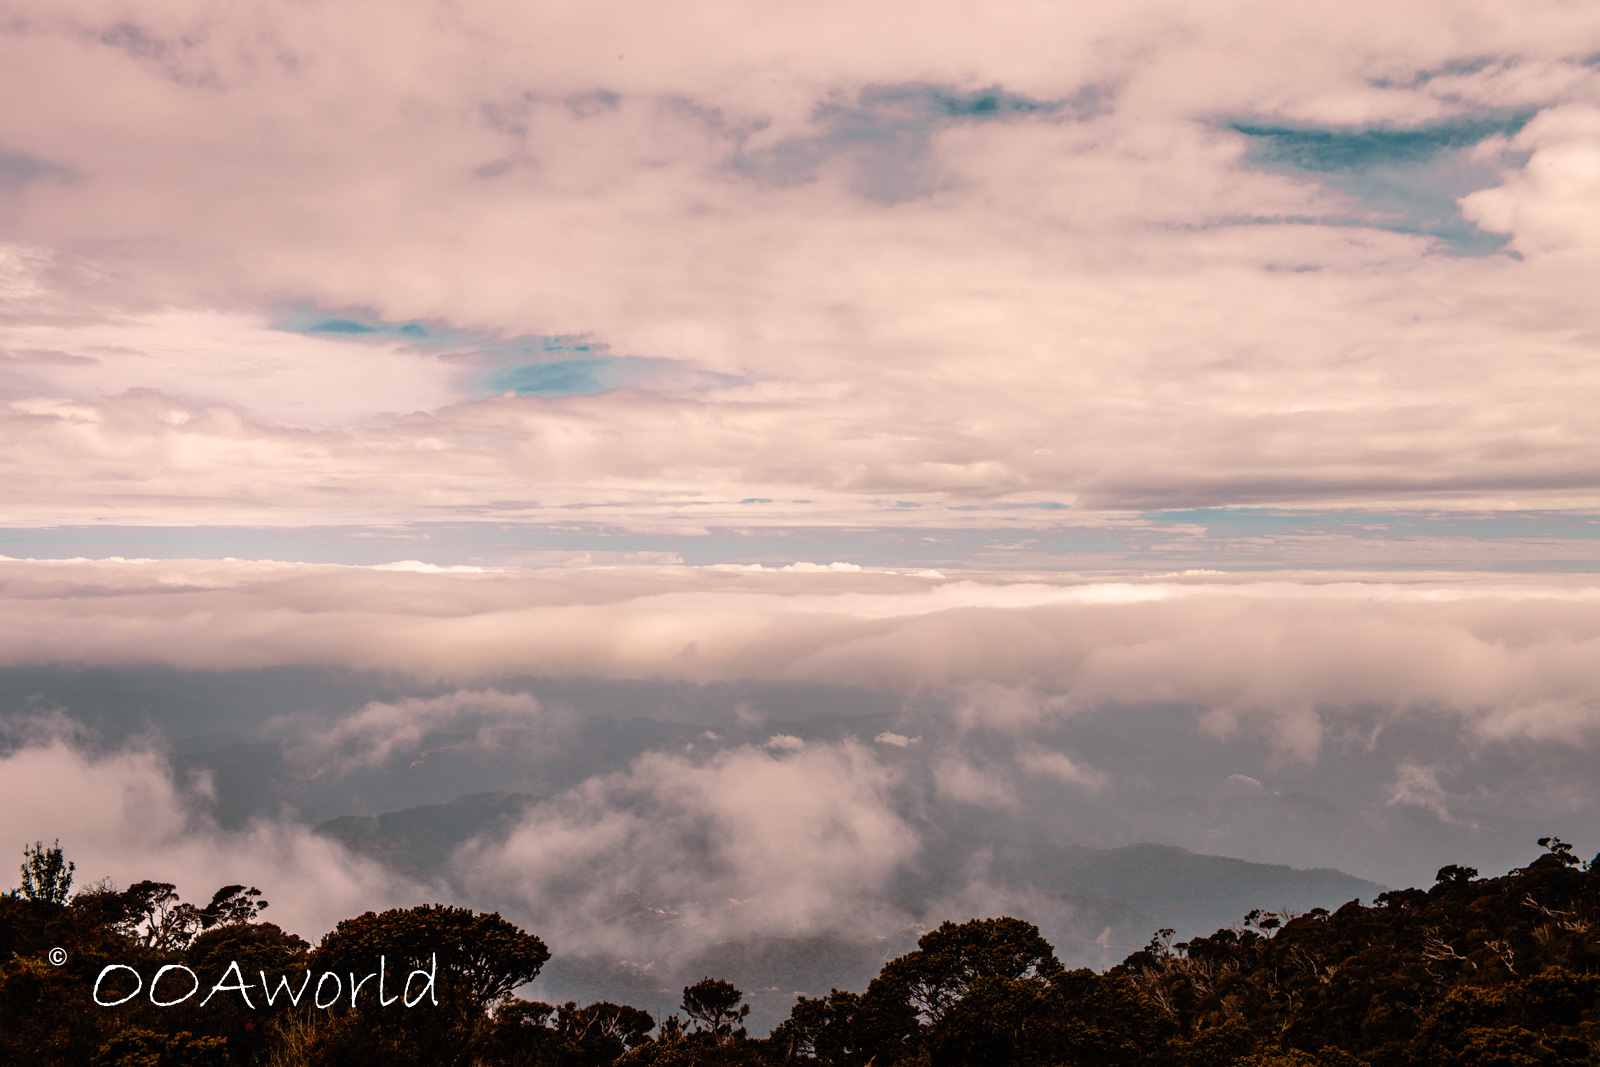 Malaysia Mount Kinabalu Climb Laban Rata Skyline Photo Ooaworld